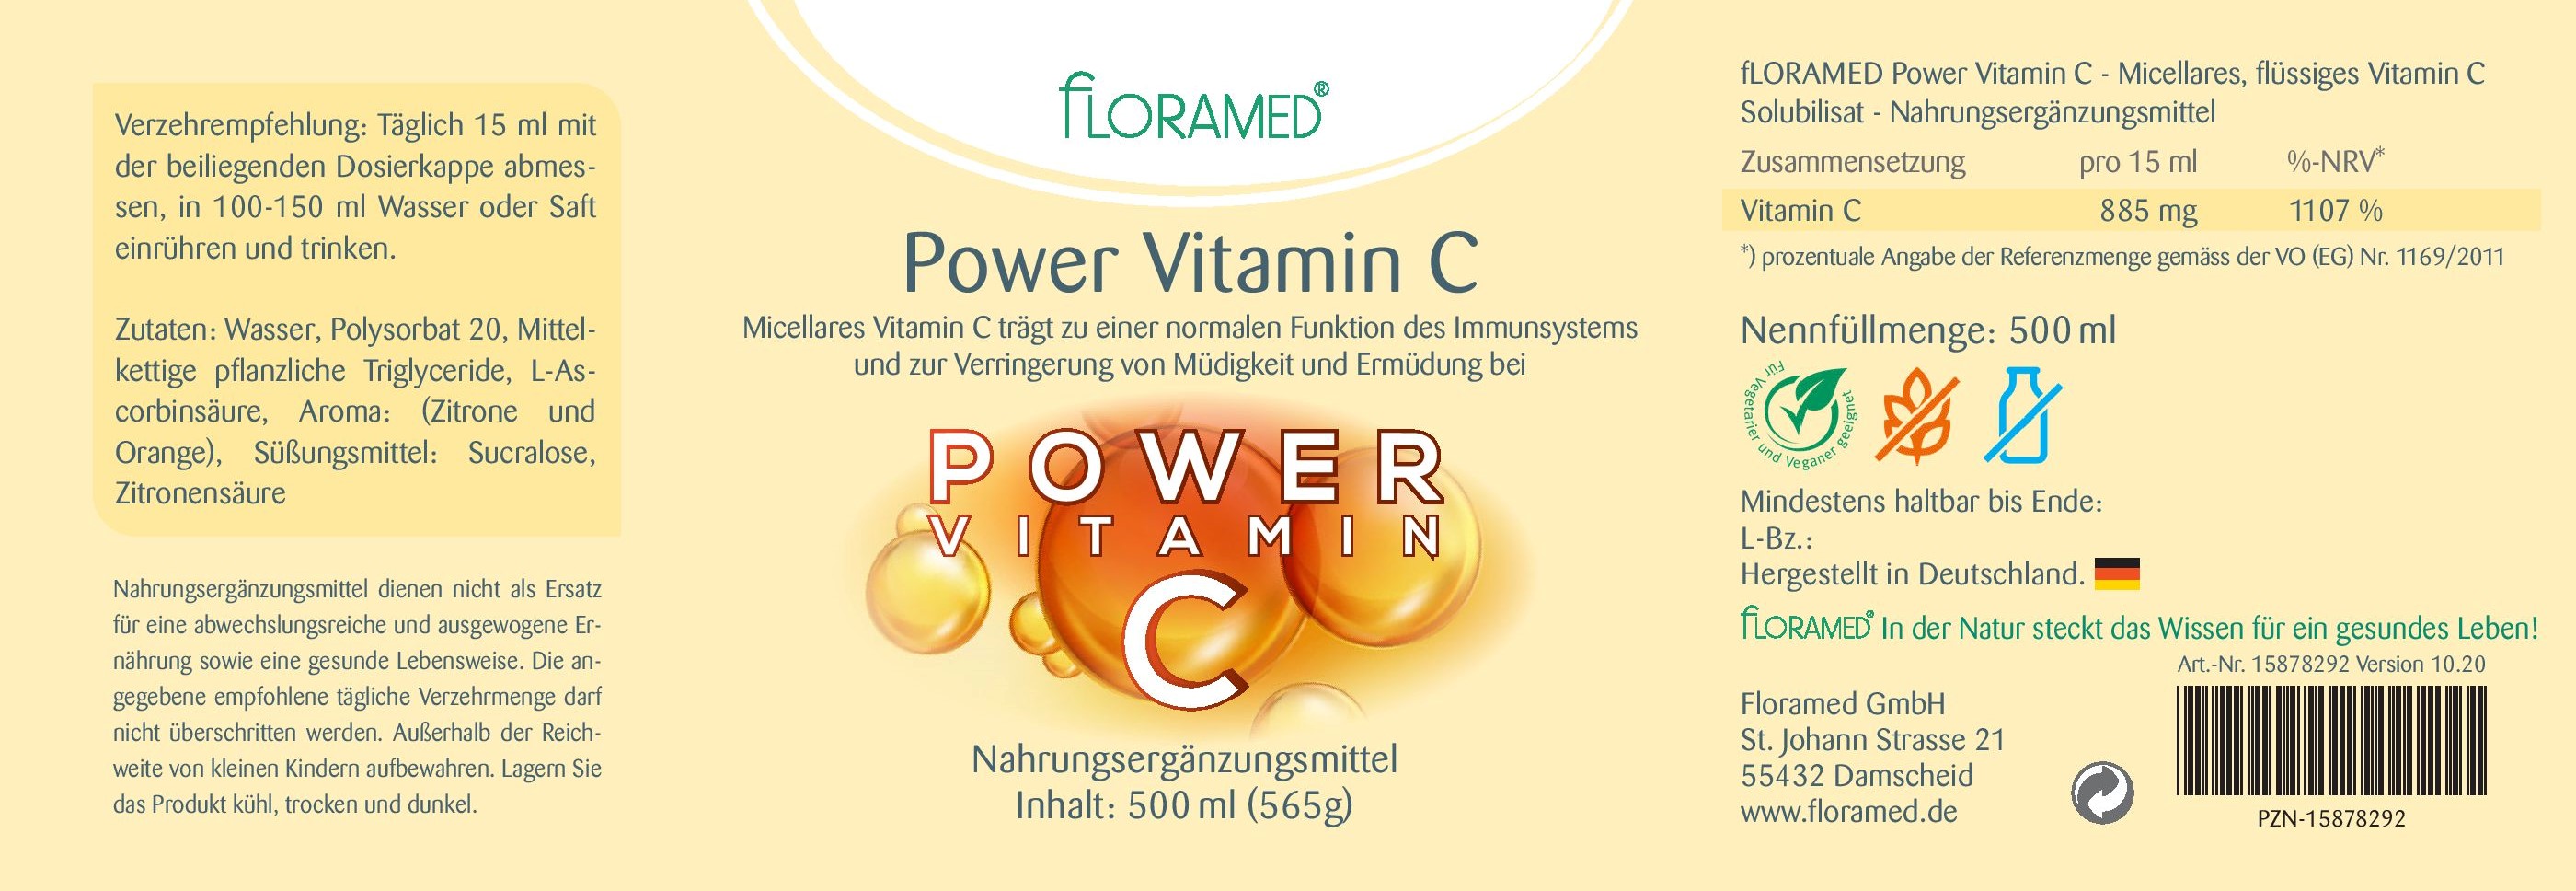 Floramed Vitamin C Power